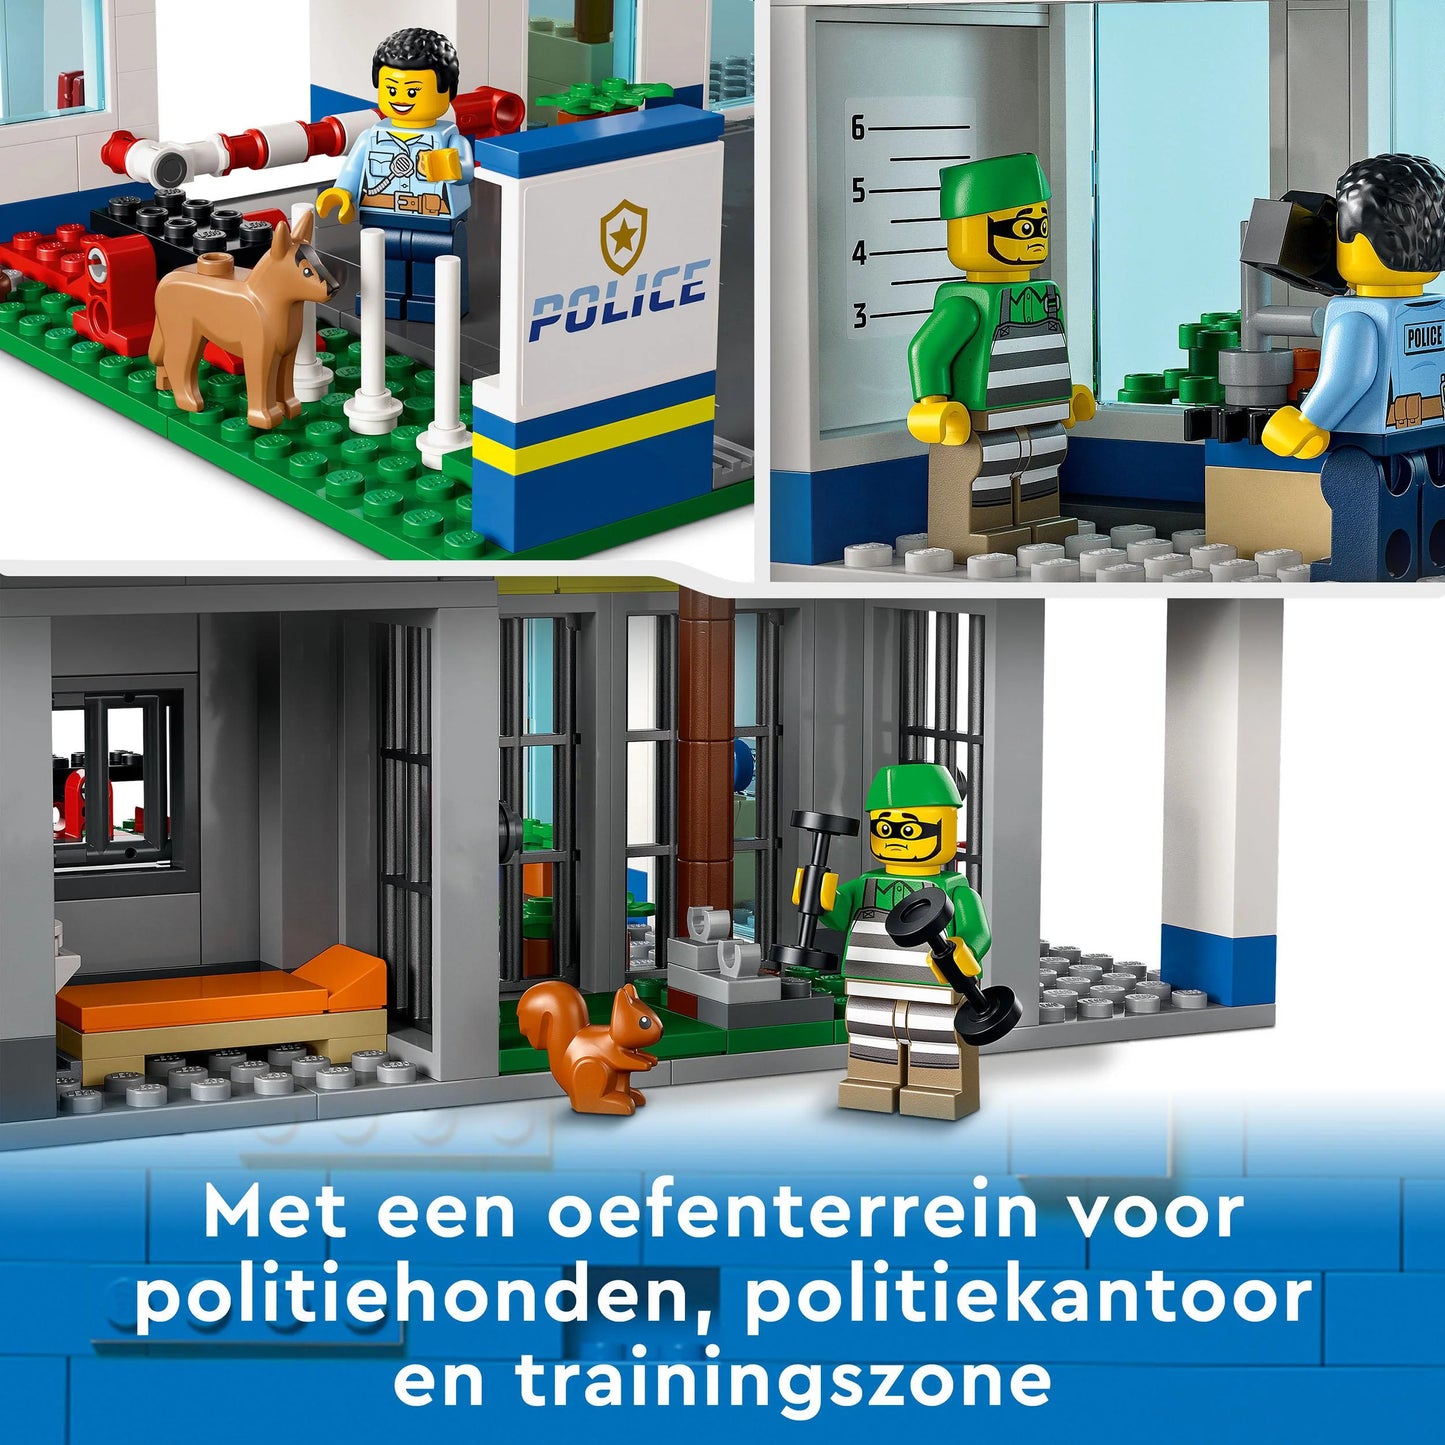 Police Station-LEGO City